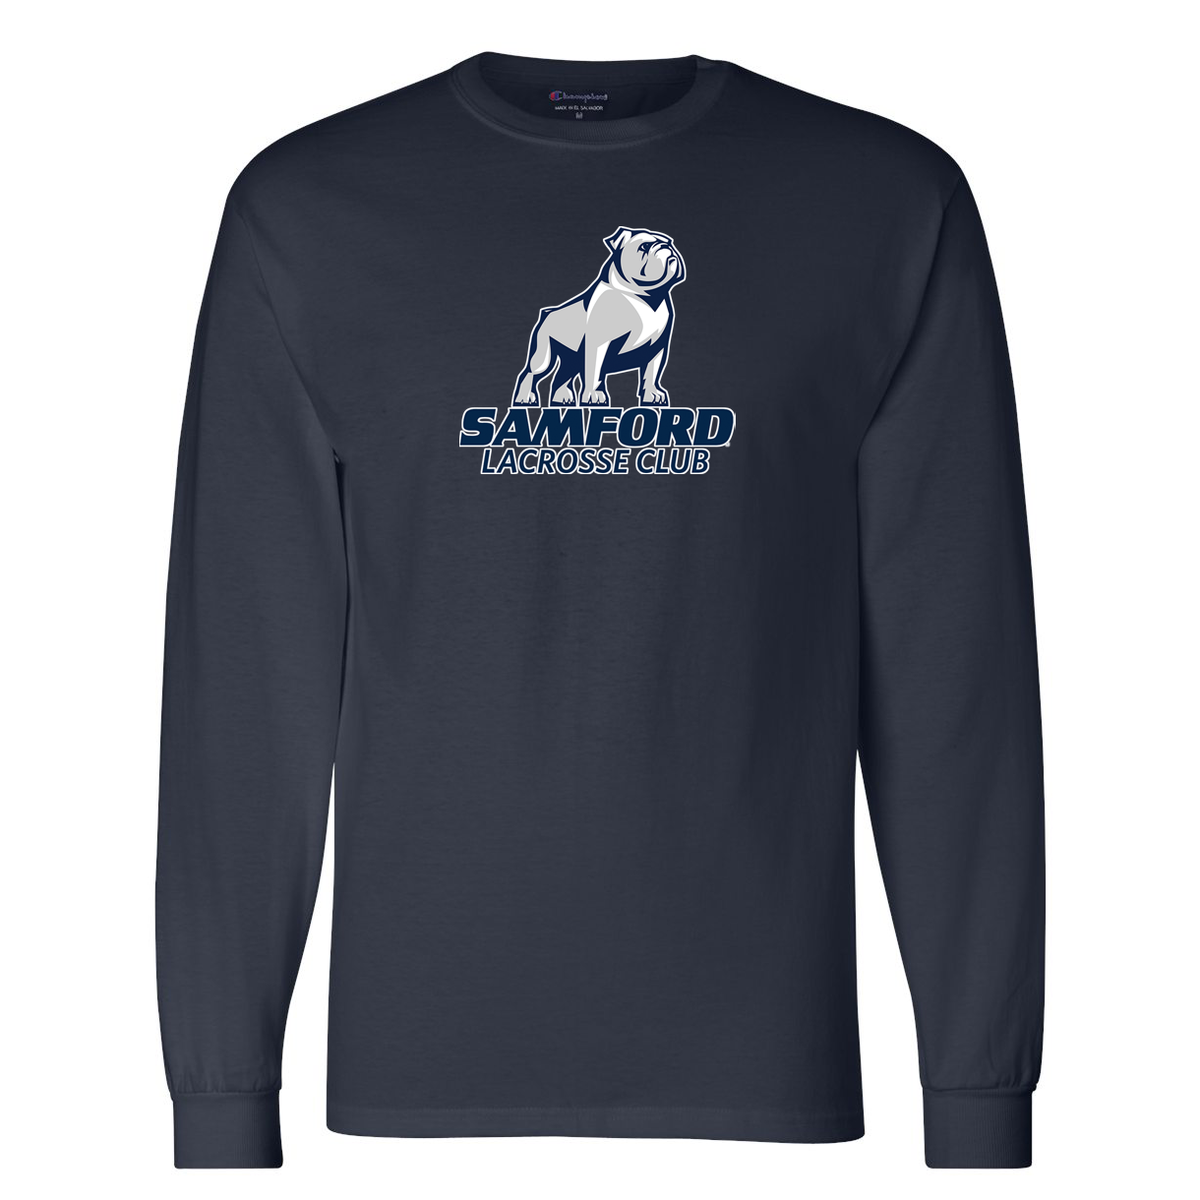 Samford University Lacrosse Club Champion Long Sleeve T-Shirt